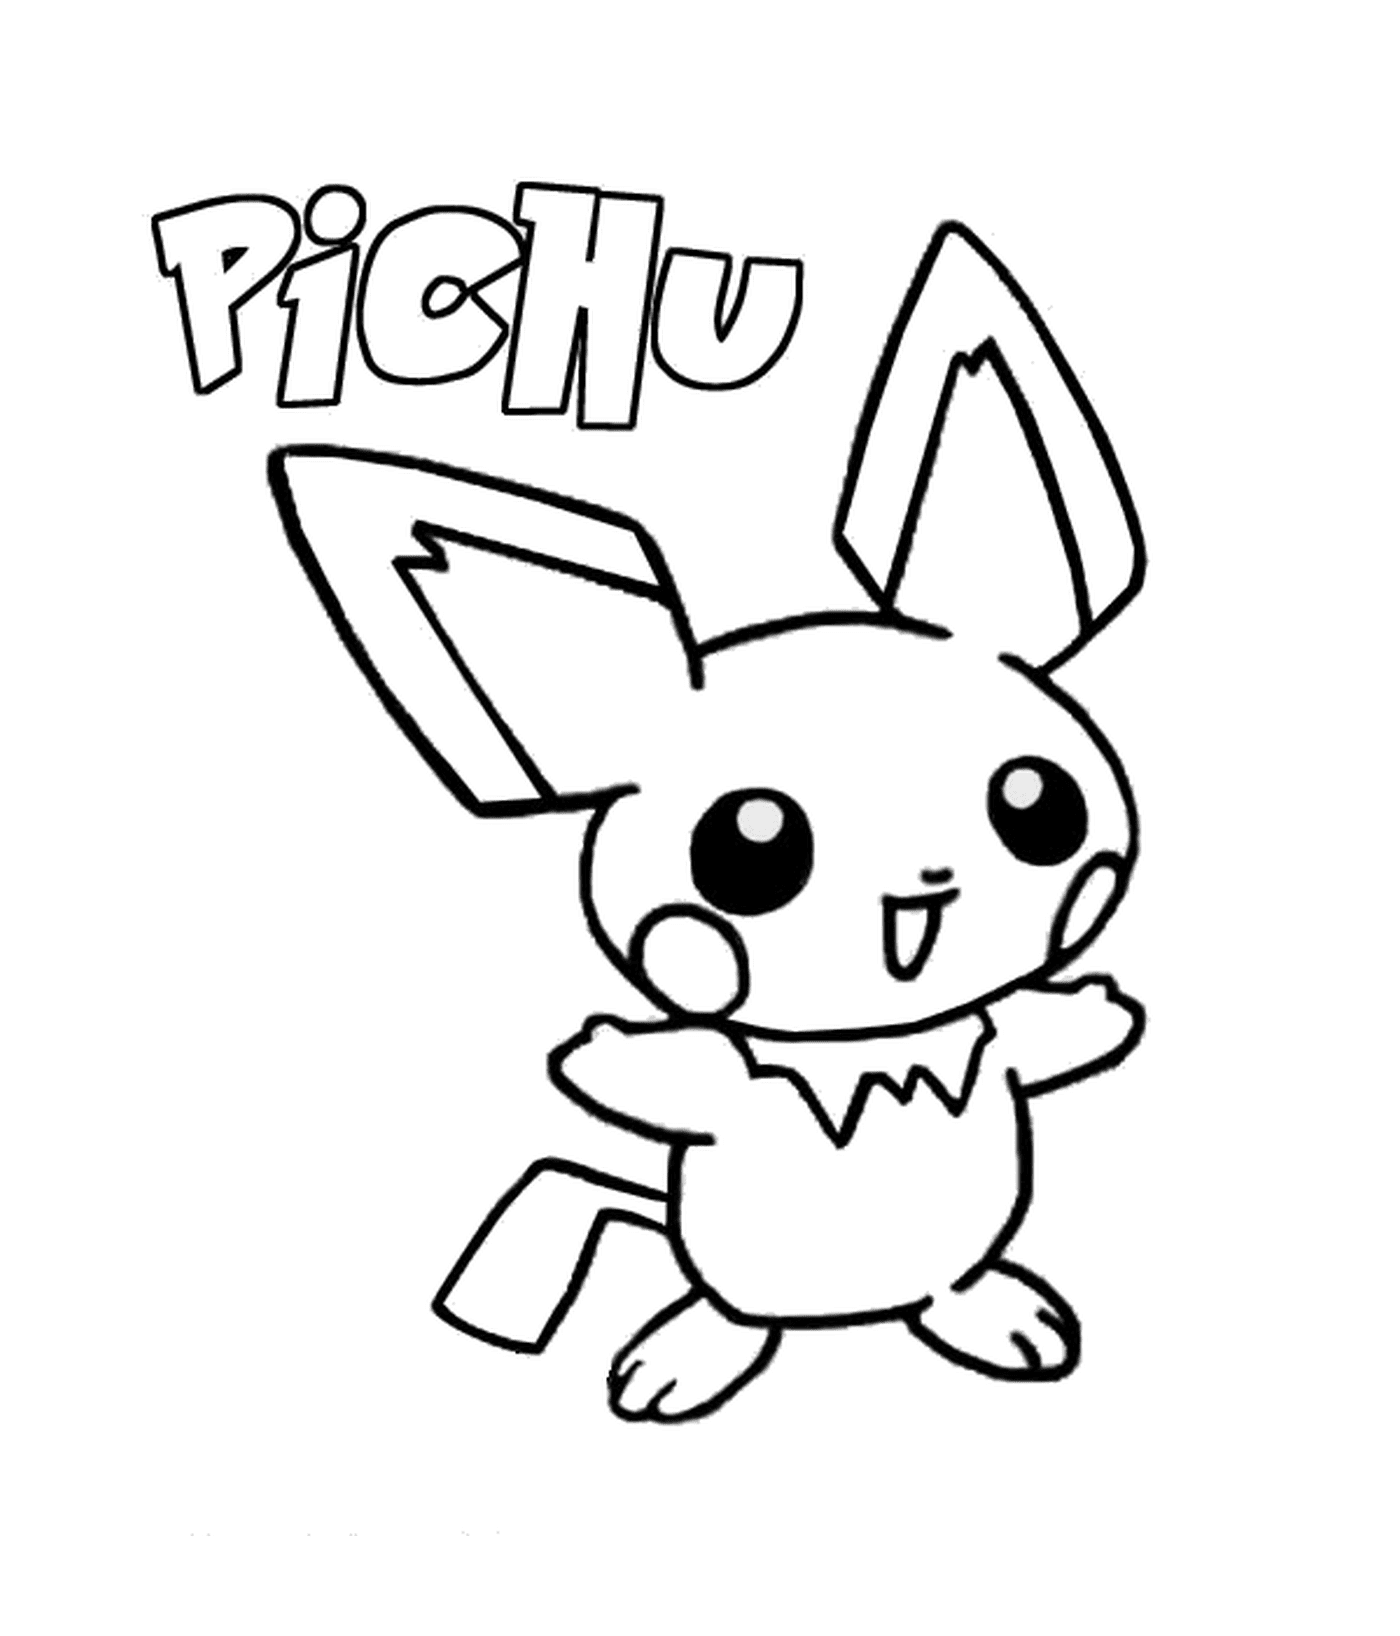  Pichu : Baby version of Pikachu 